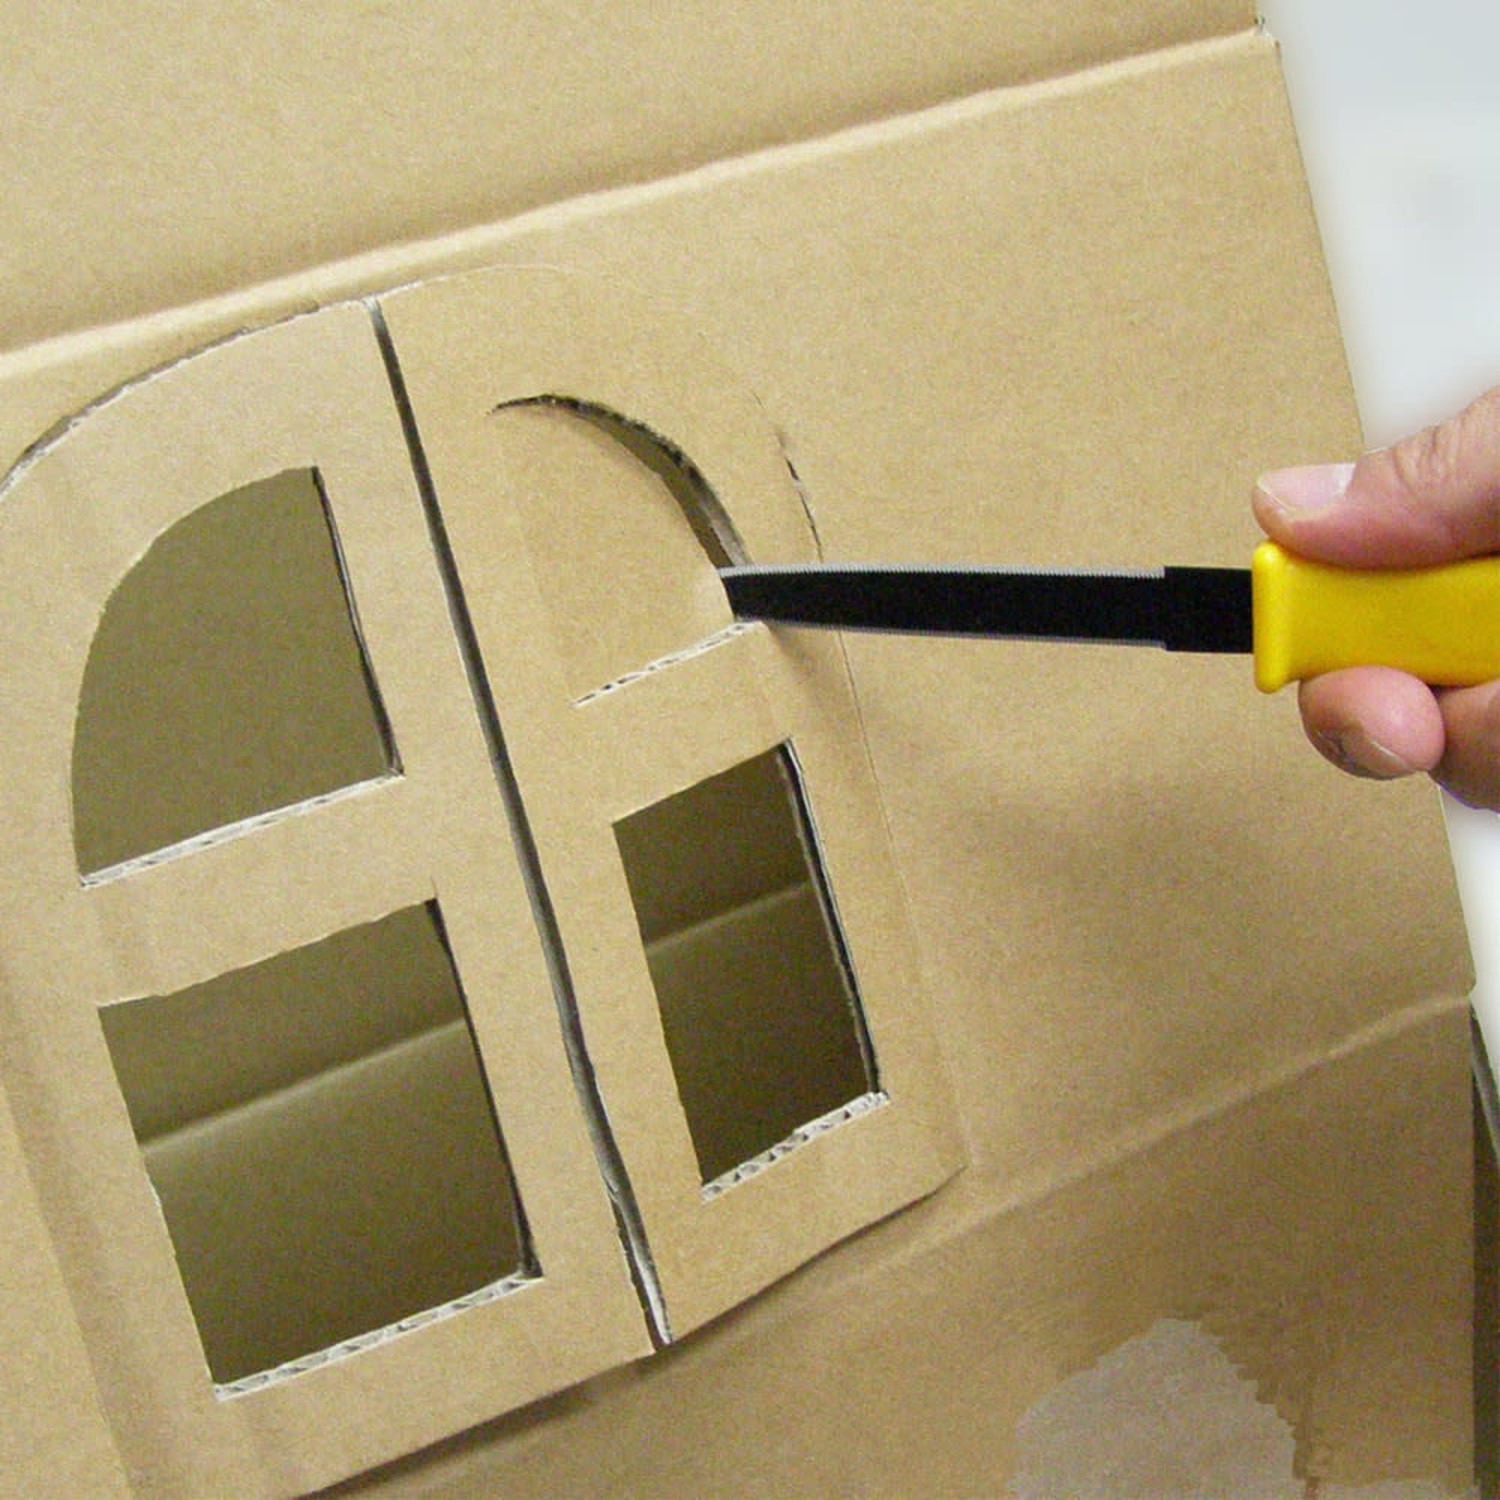 cardboard cutter - Whisk